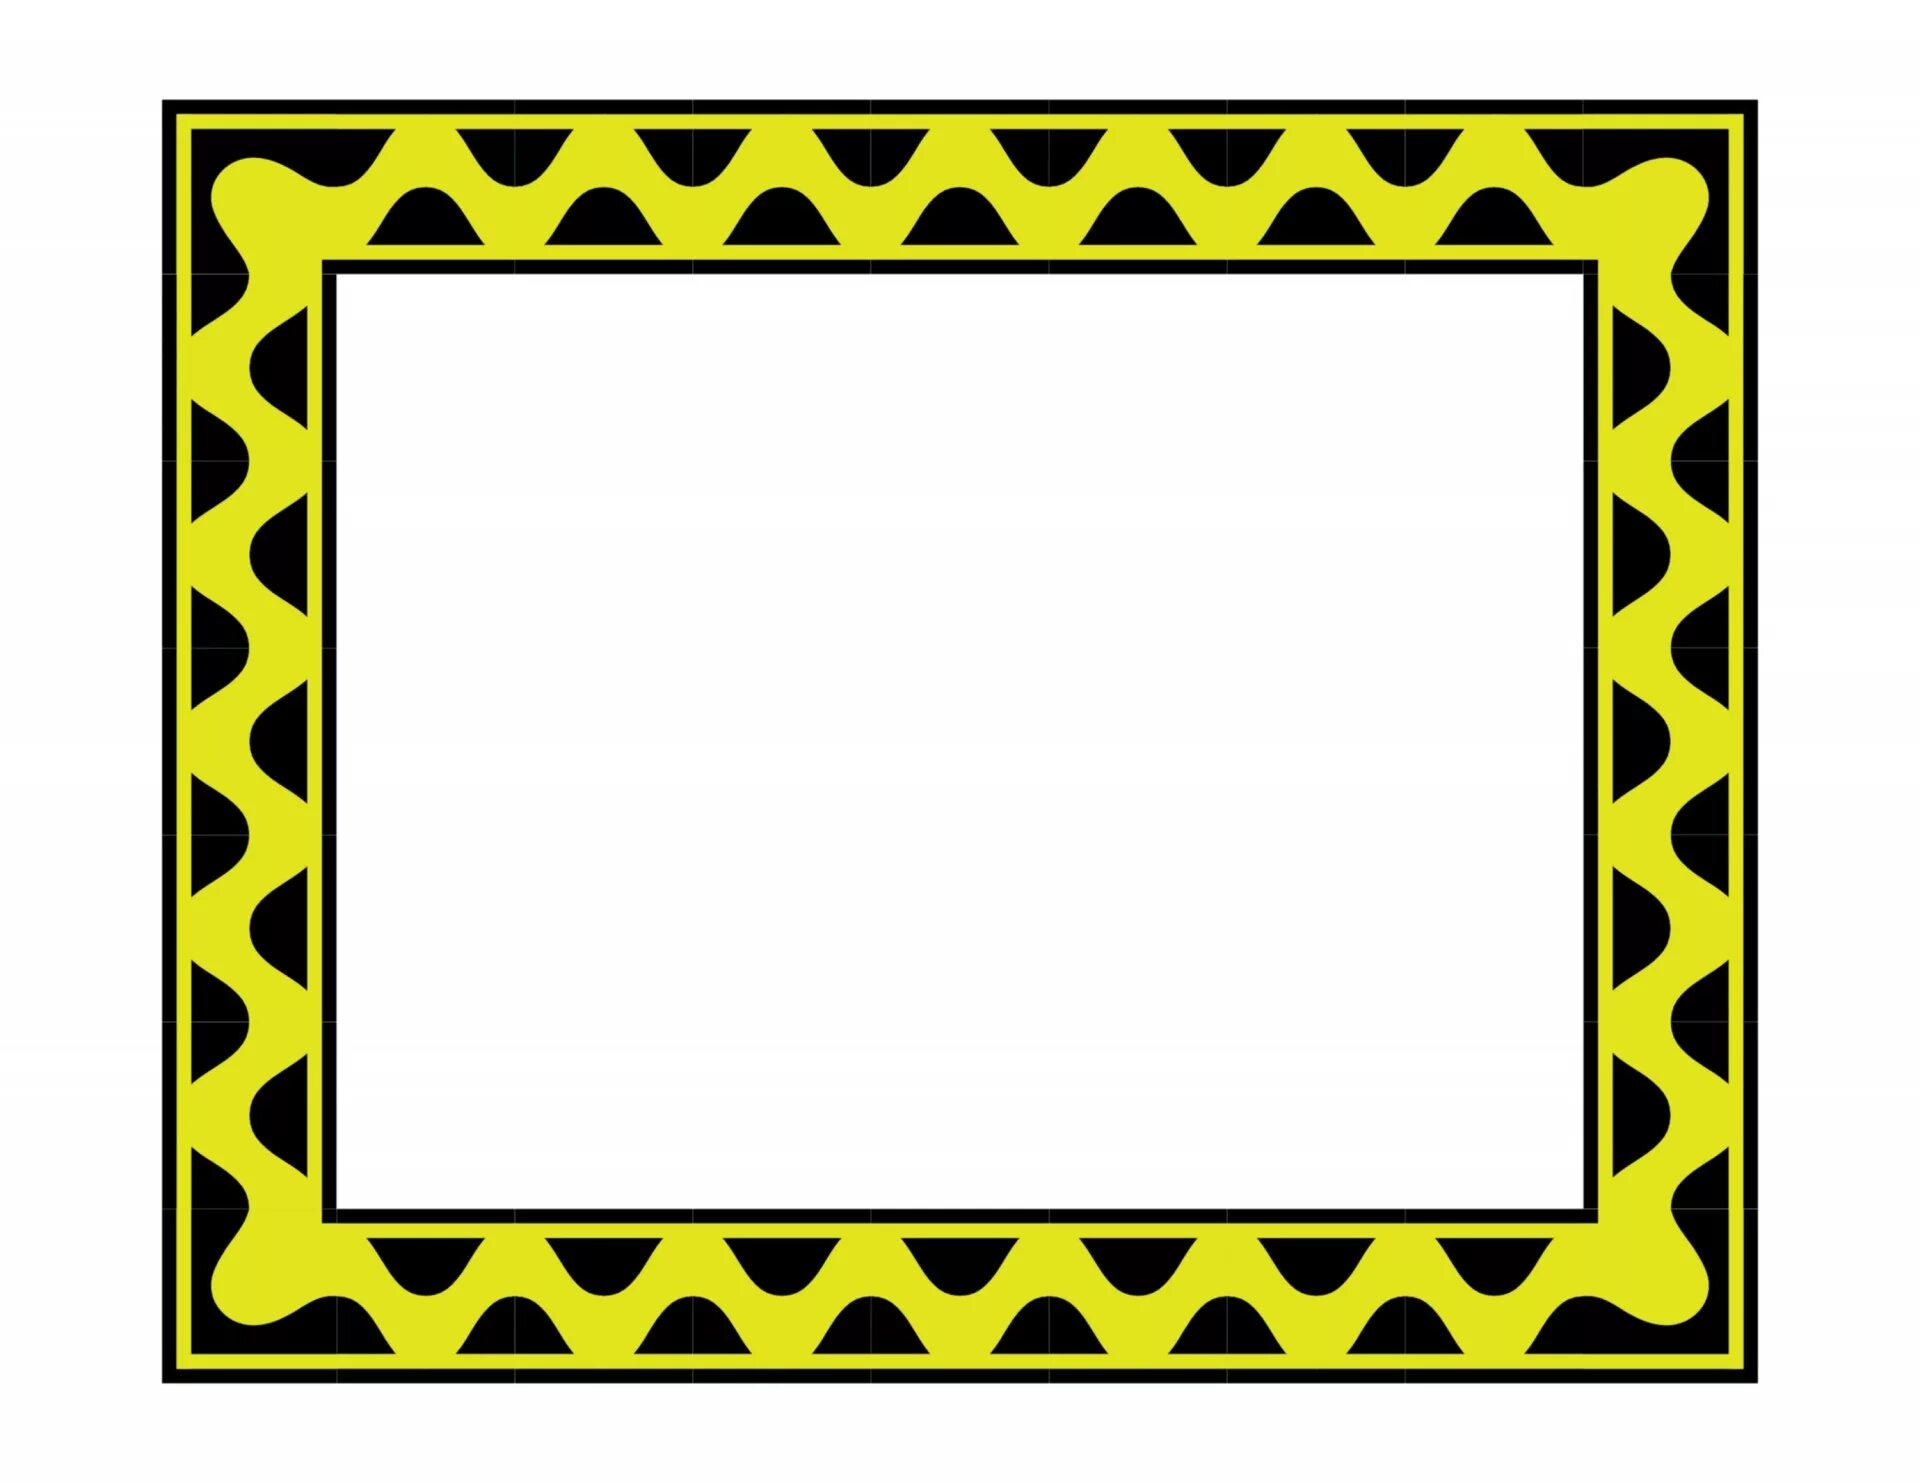 Желтая рамка вокруг экрана. Желто черная рамка. Желтая рамка. Желтая с черным рамочка. Желто черная рамка для фотошопа.